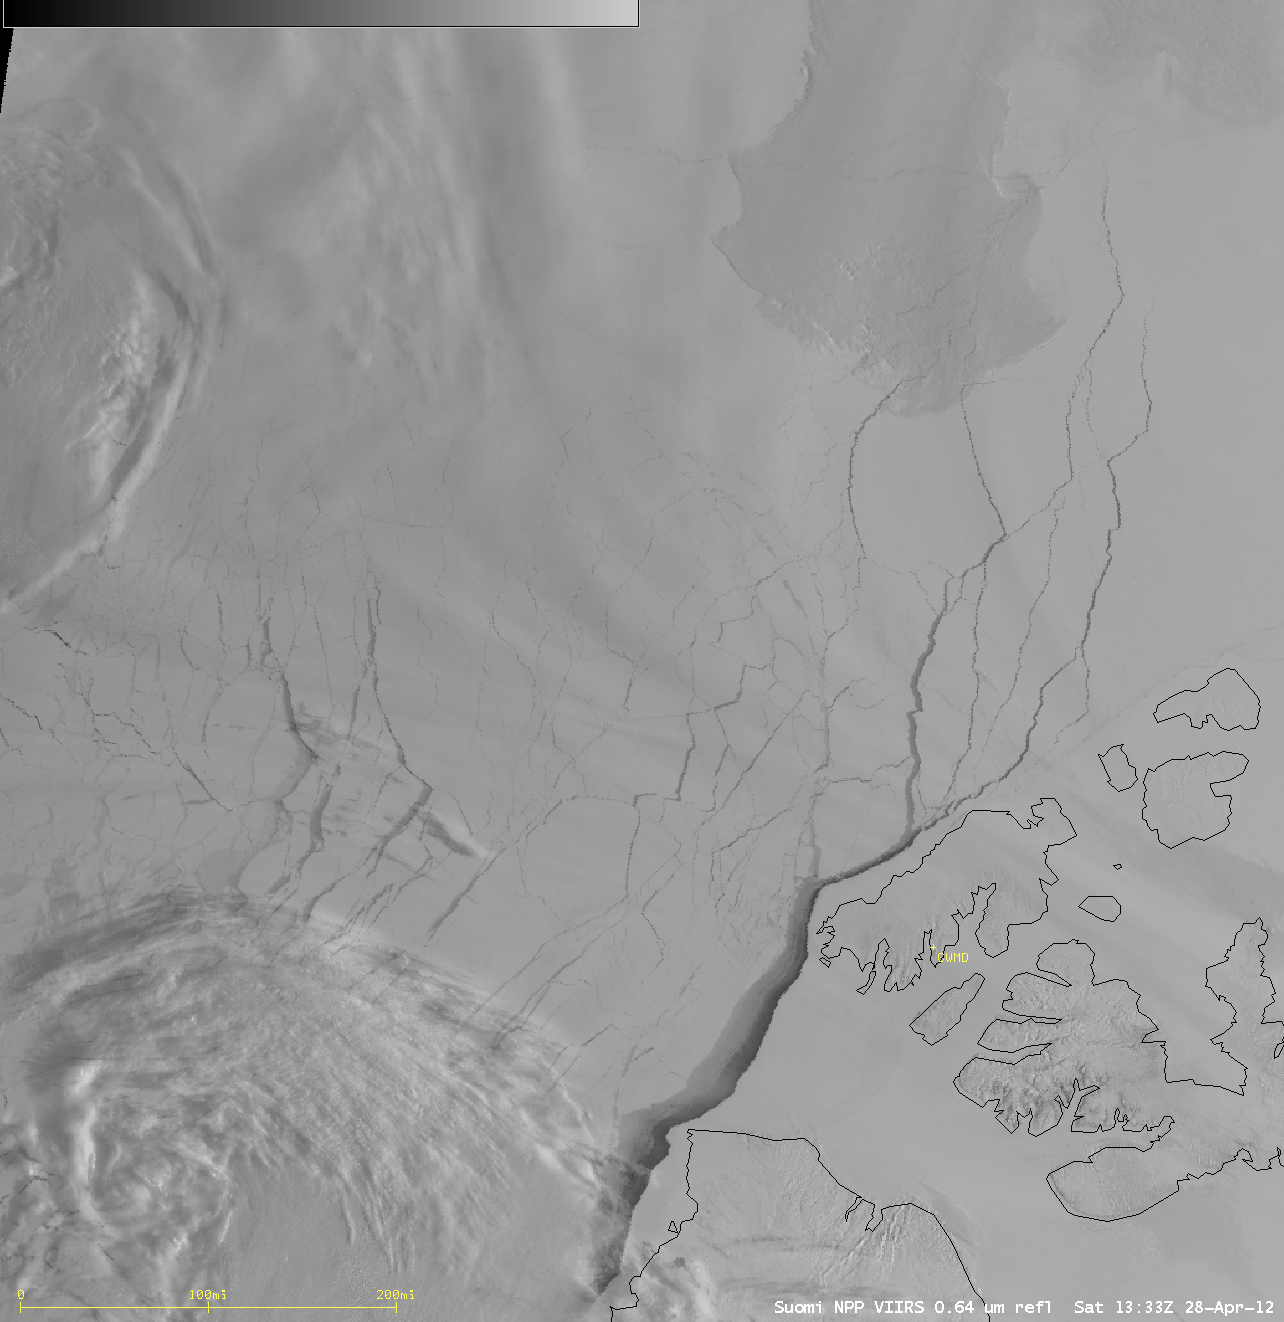 Suomi NPP VIIRS 0.64 Âµm visible images (Arctic Ocean, Canadian Archipelago)